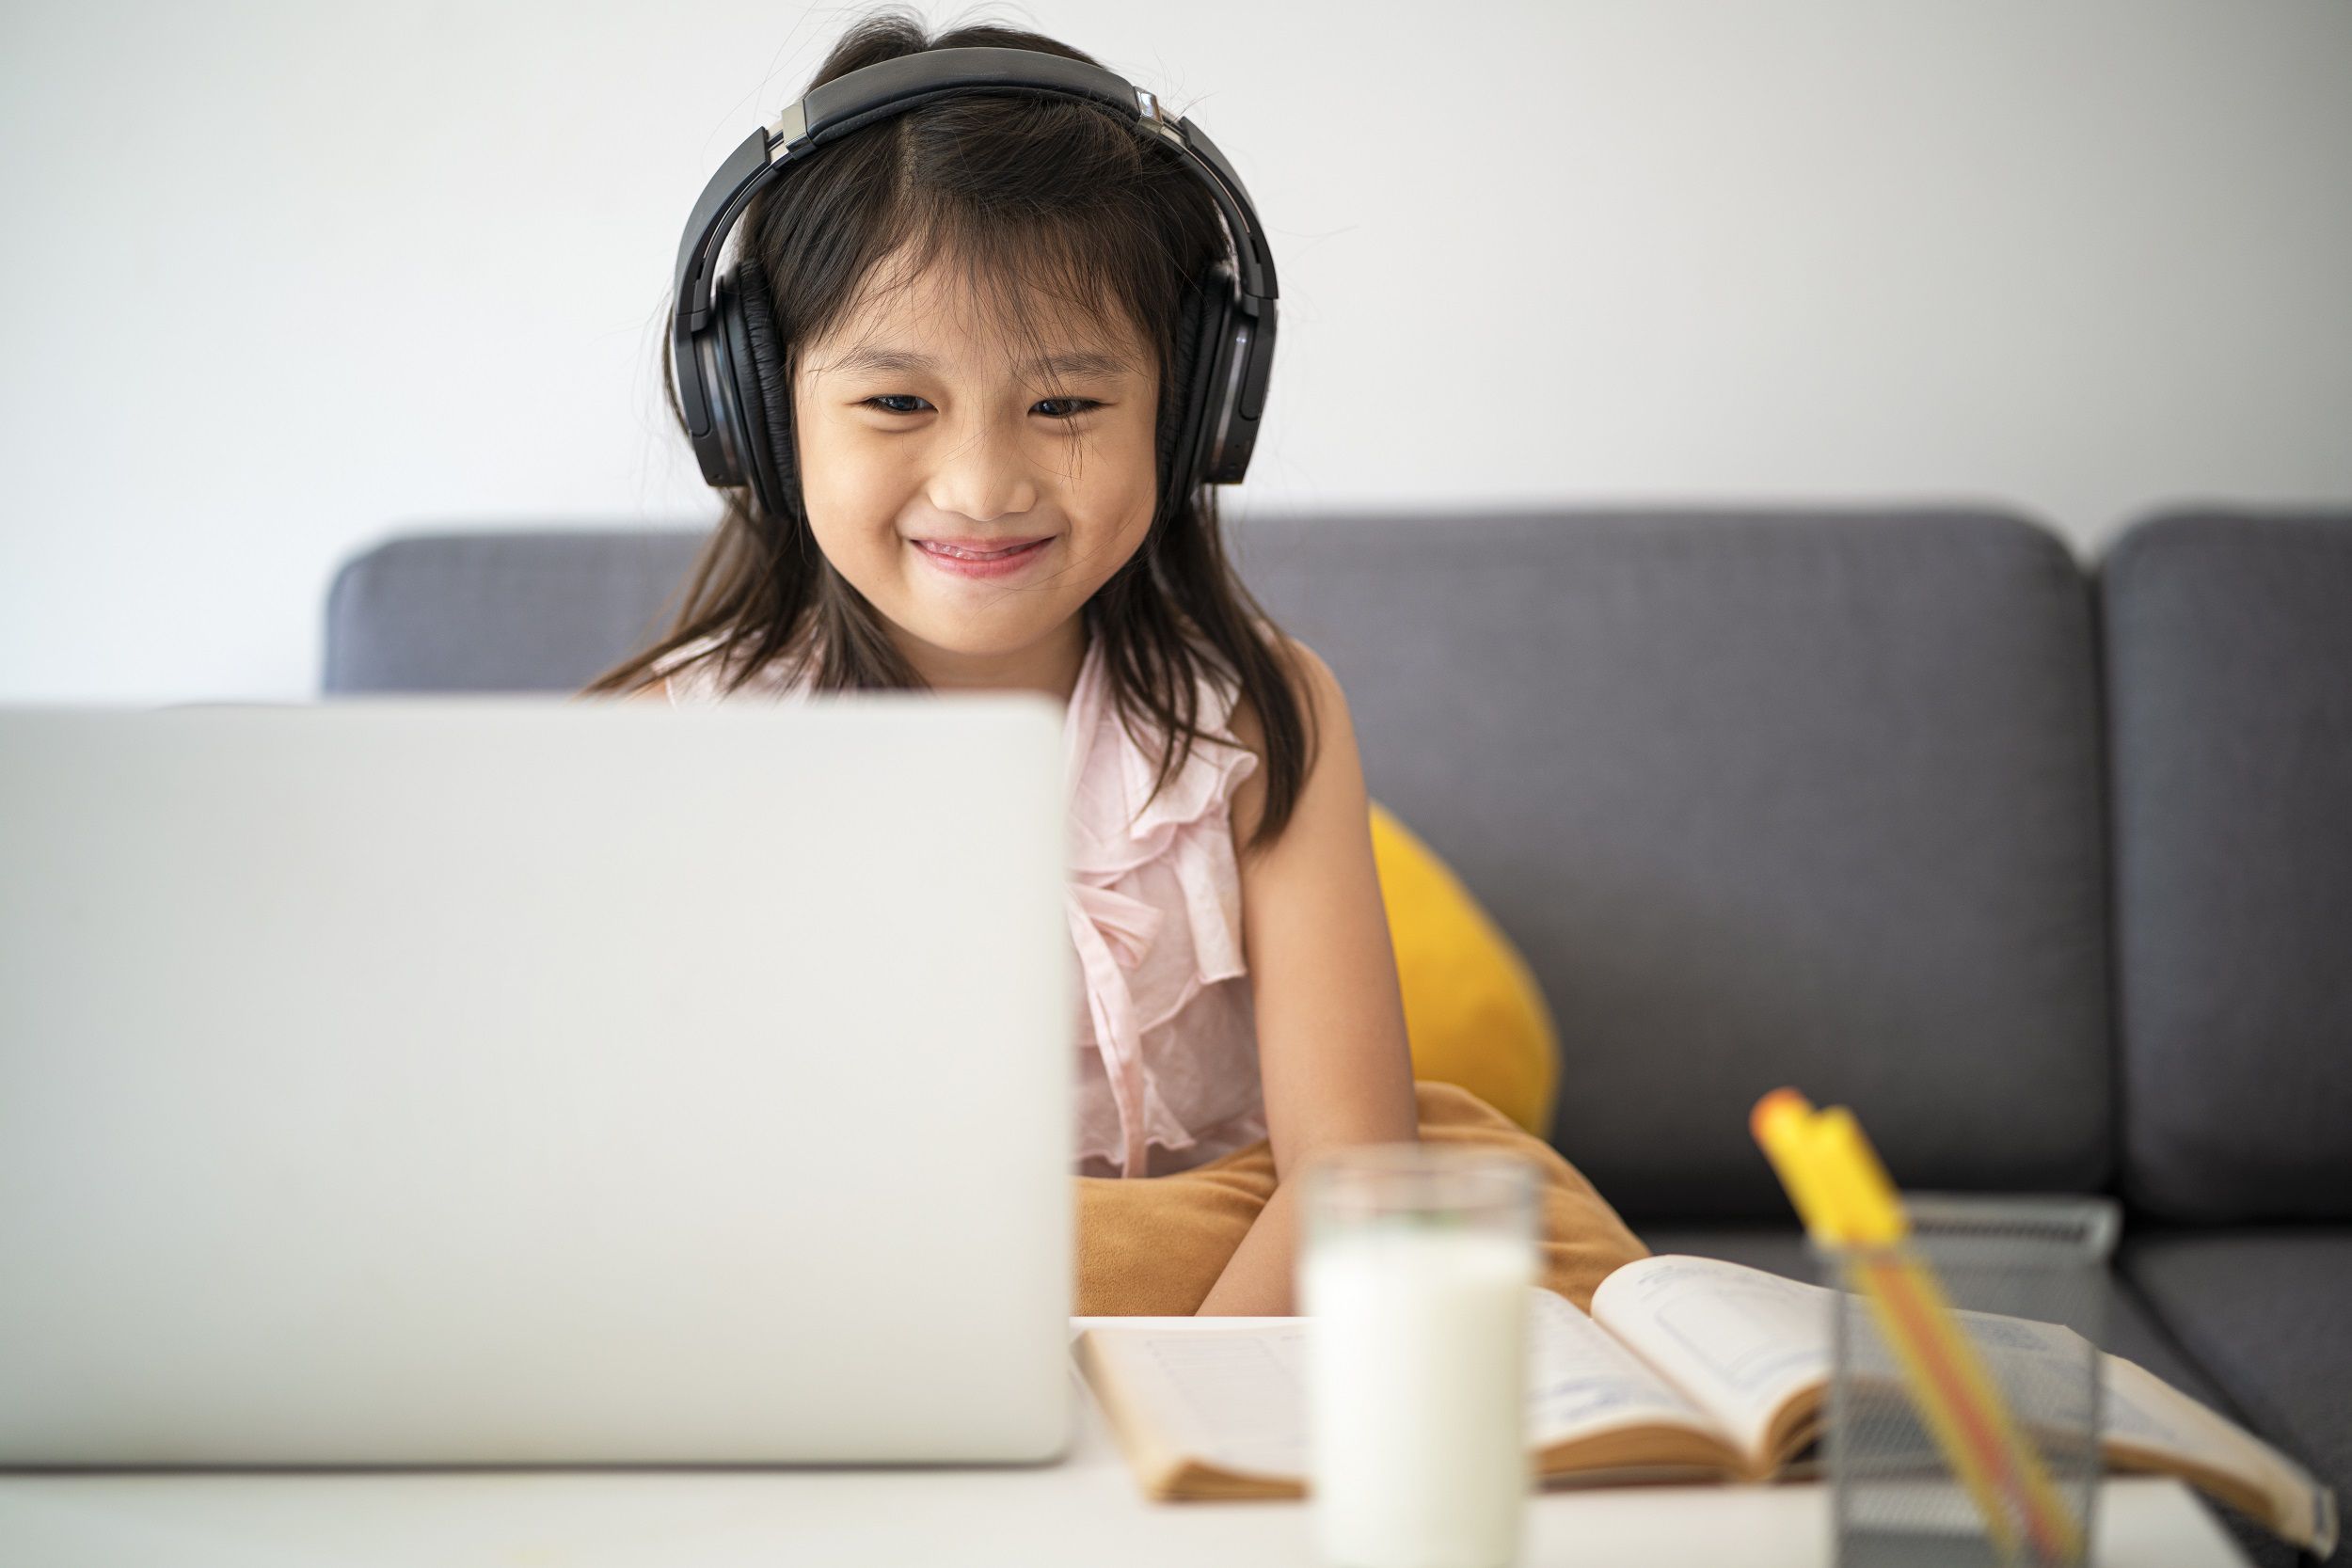 Small girl wearing headphones